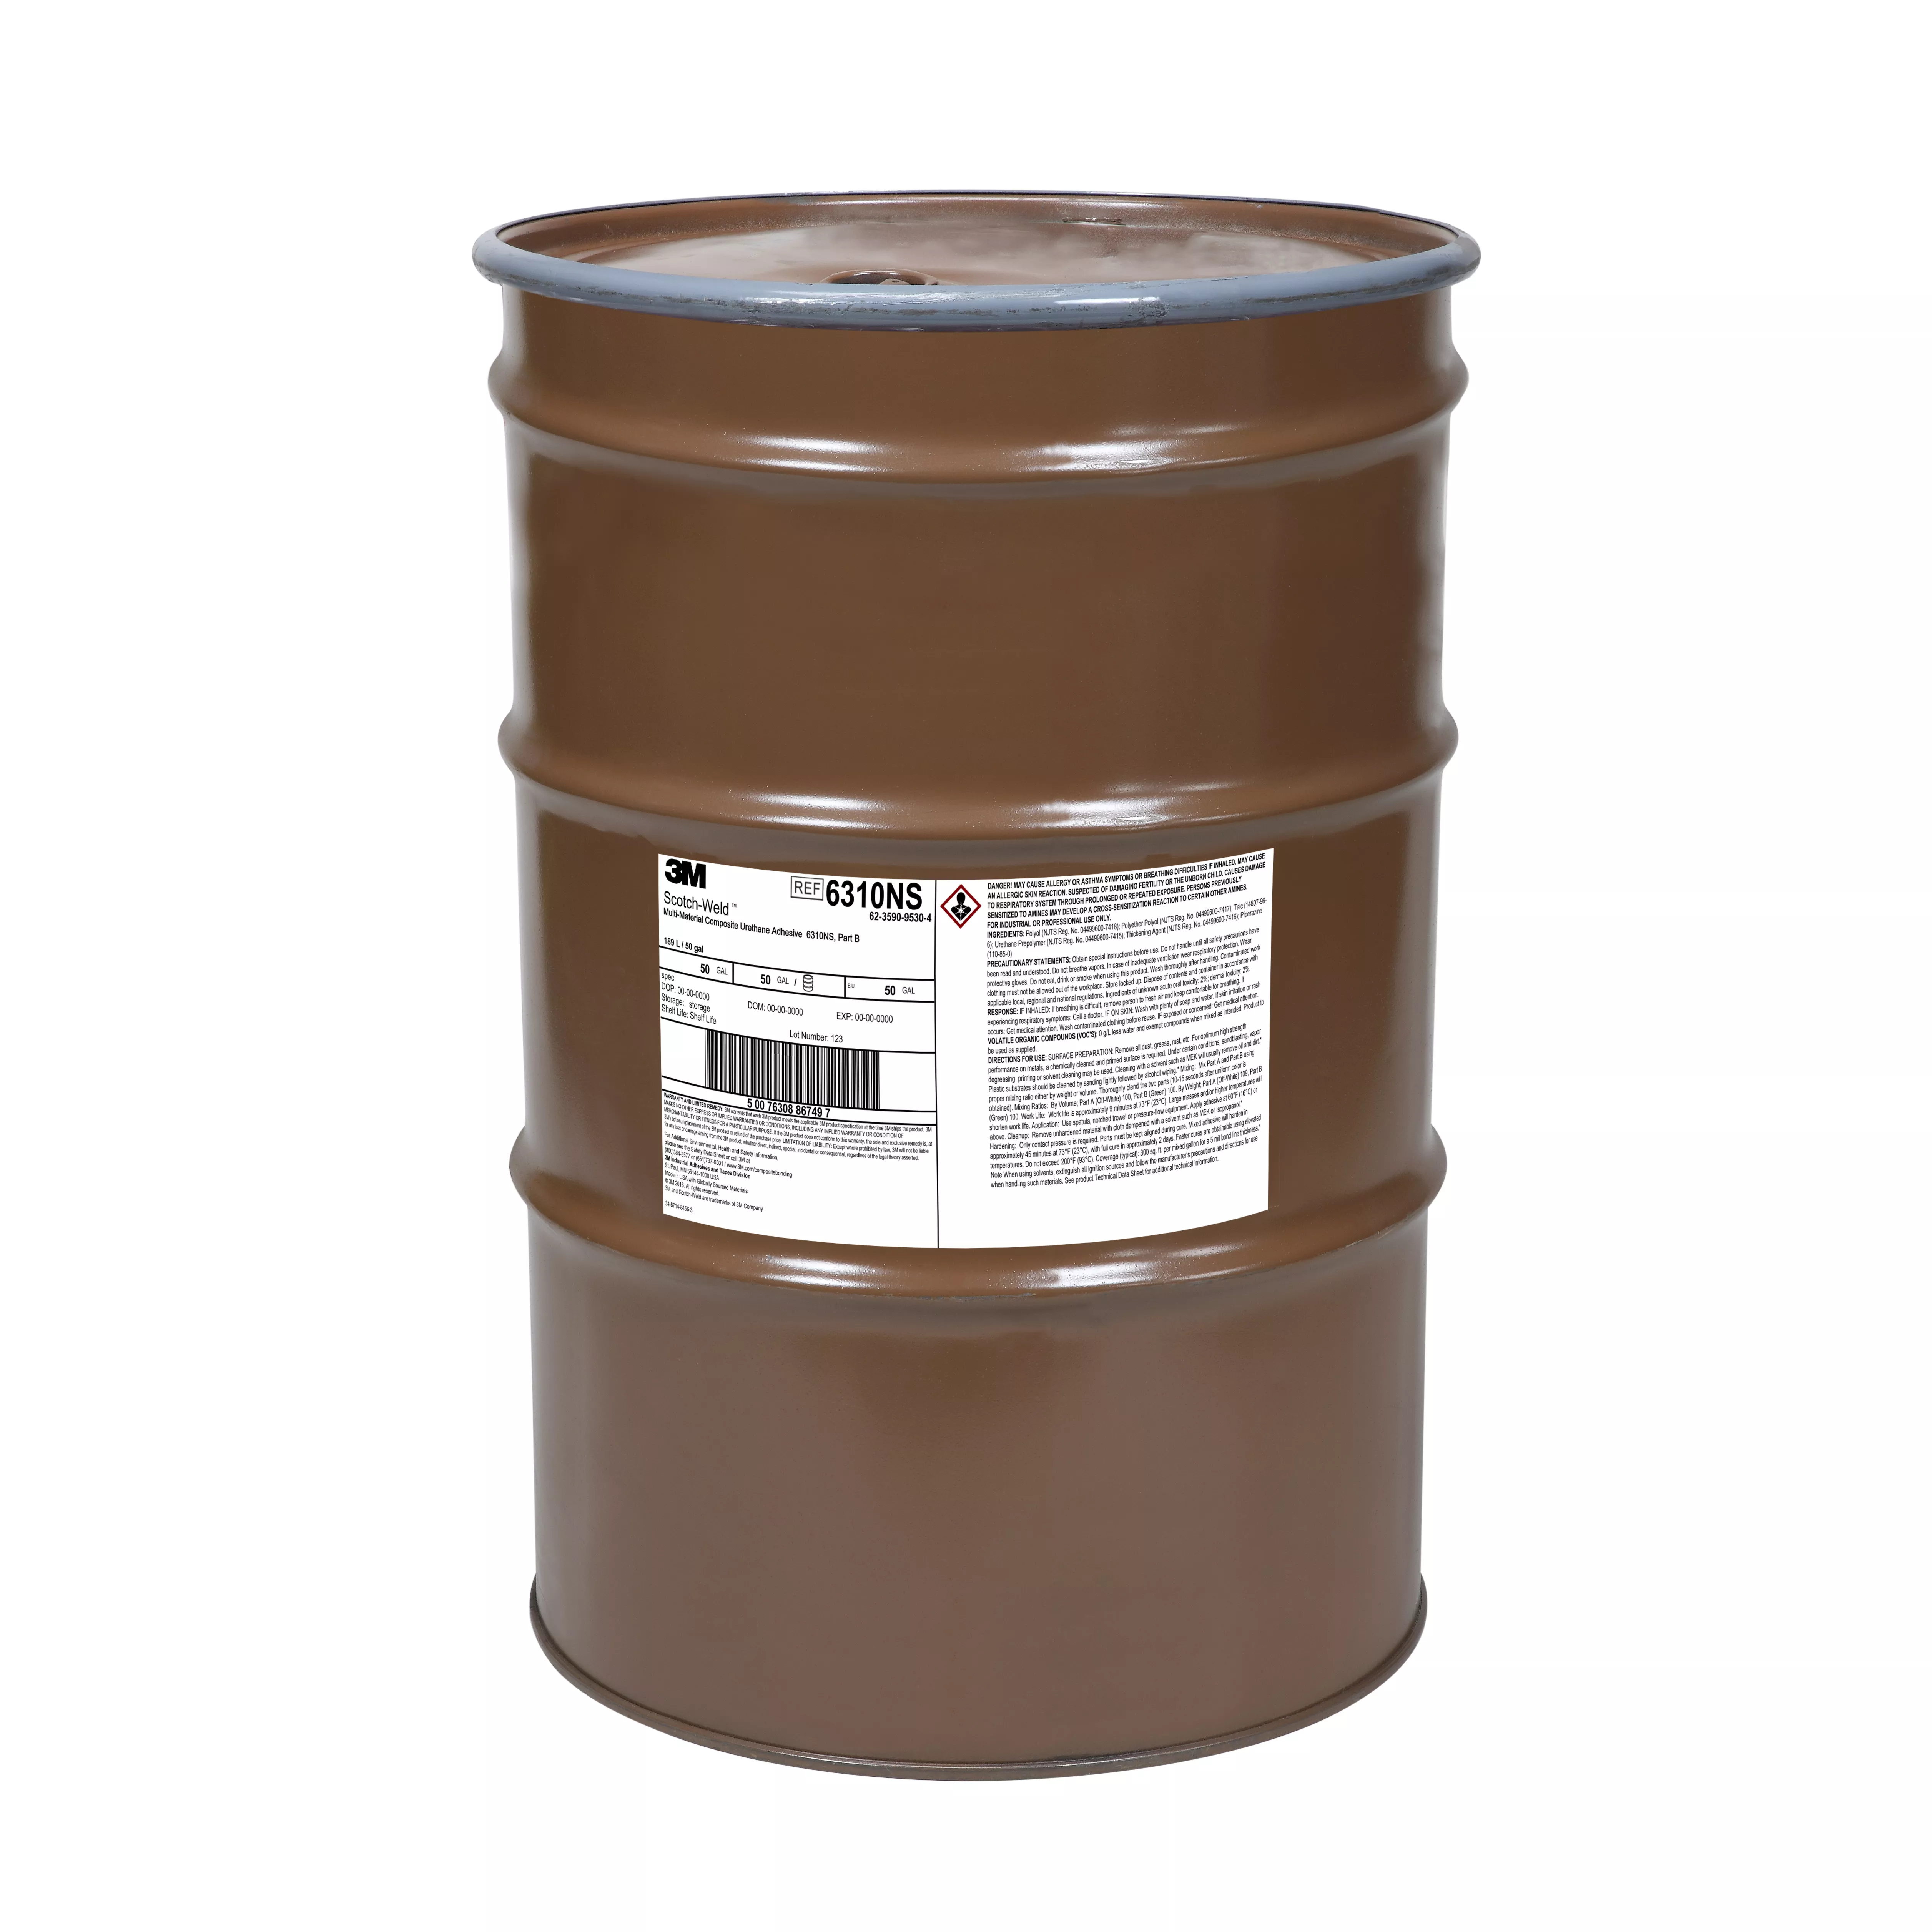 SKU 7010412199 | 3M™ Scotch-Weld™ Multi-Material Composite Urethane Adhesive 6310NS